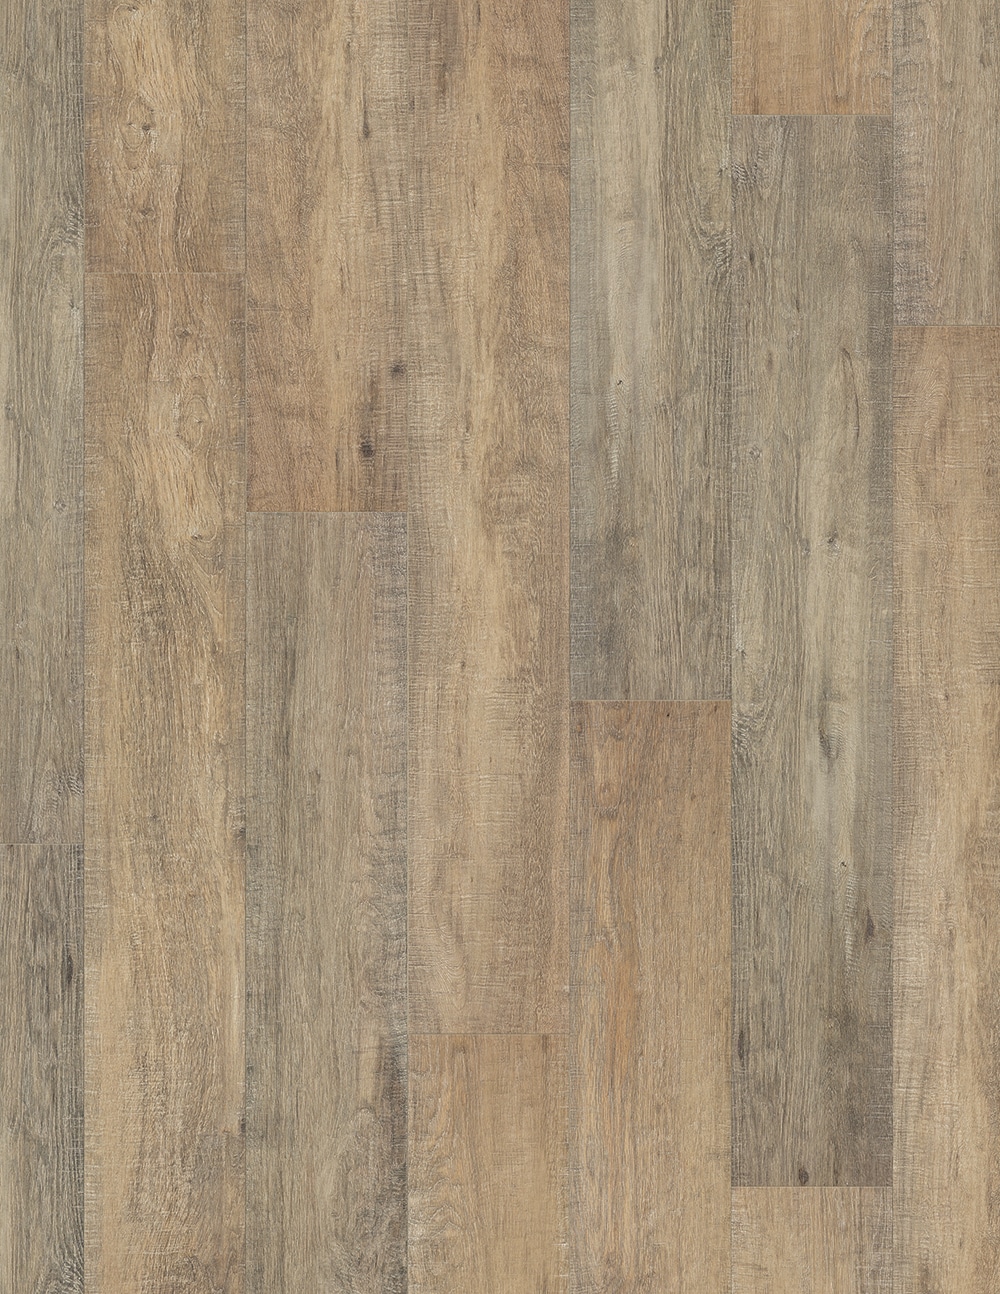 (Sample) Allen+Roth Urbanite Oak Laminate Flooring in Gray | - allen + roth 53515